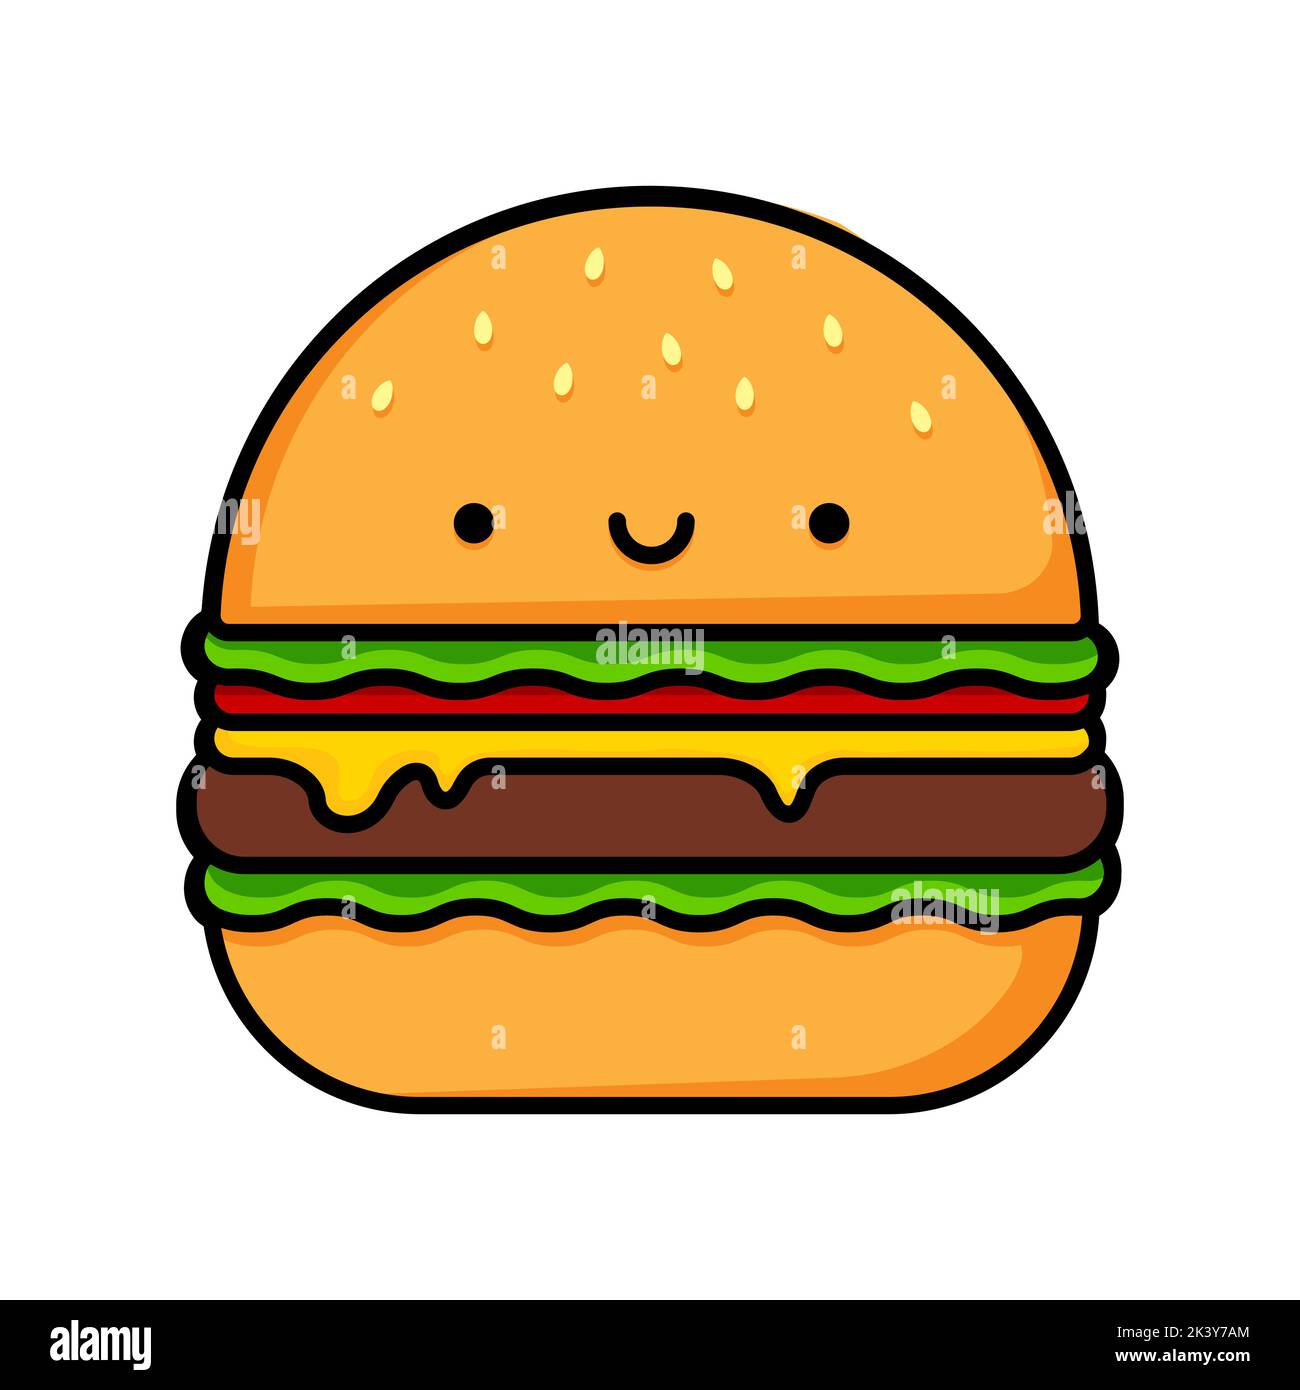 Cartoon image of a cute smiling burger. Food illustration. Vector illustration. Stock Vector